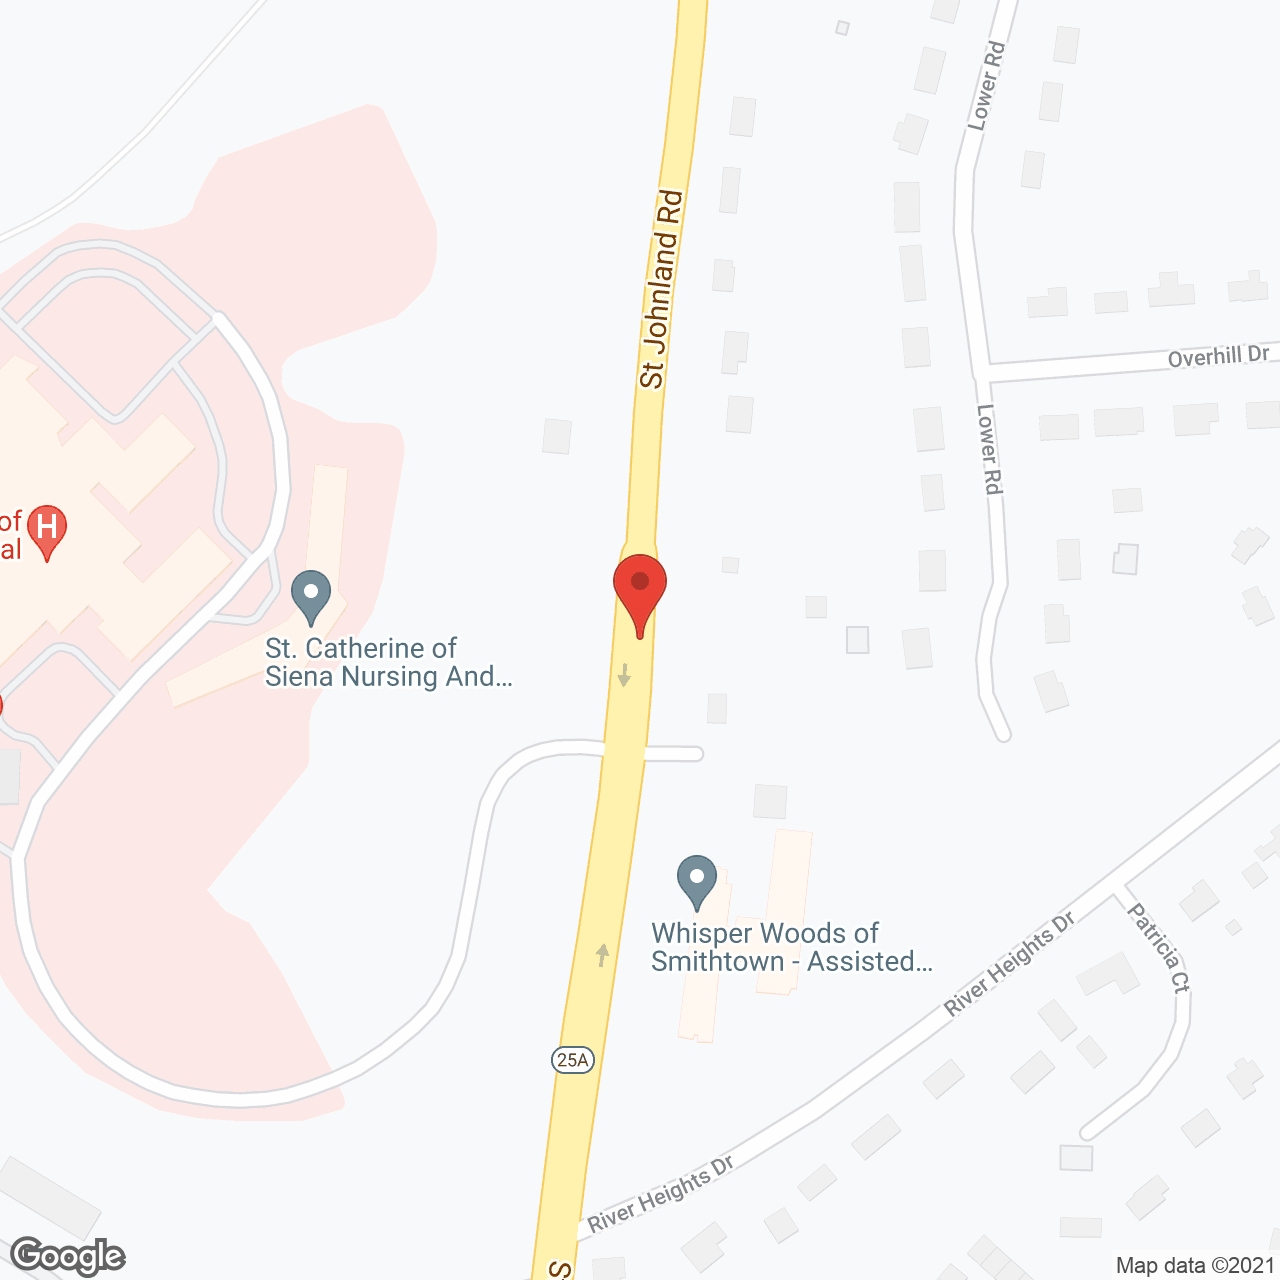 Whisper Woods of Smithtown in google map